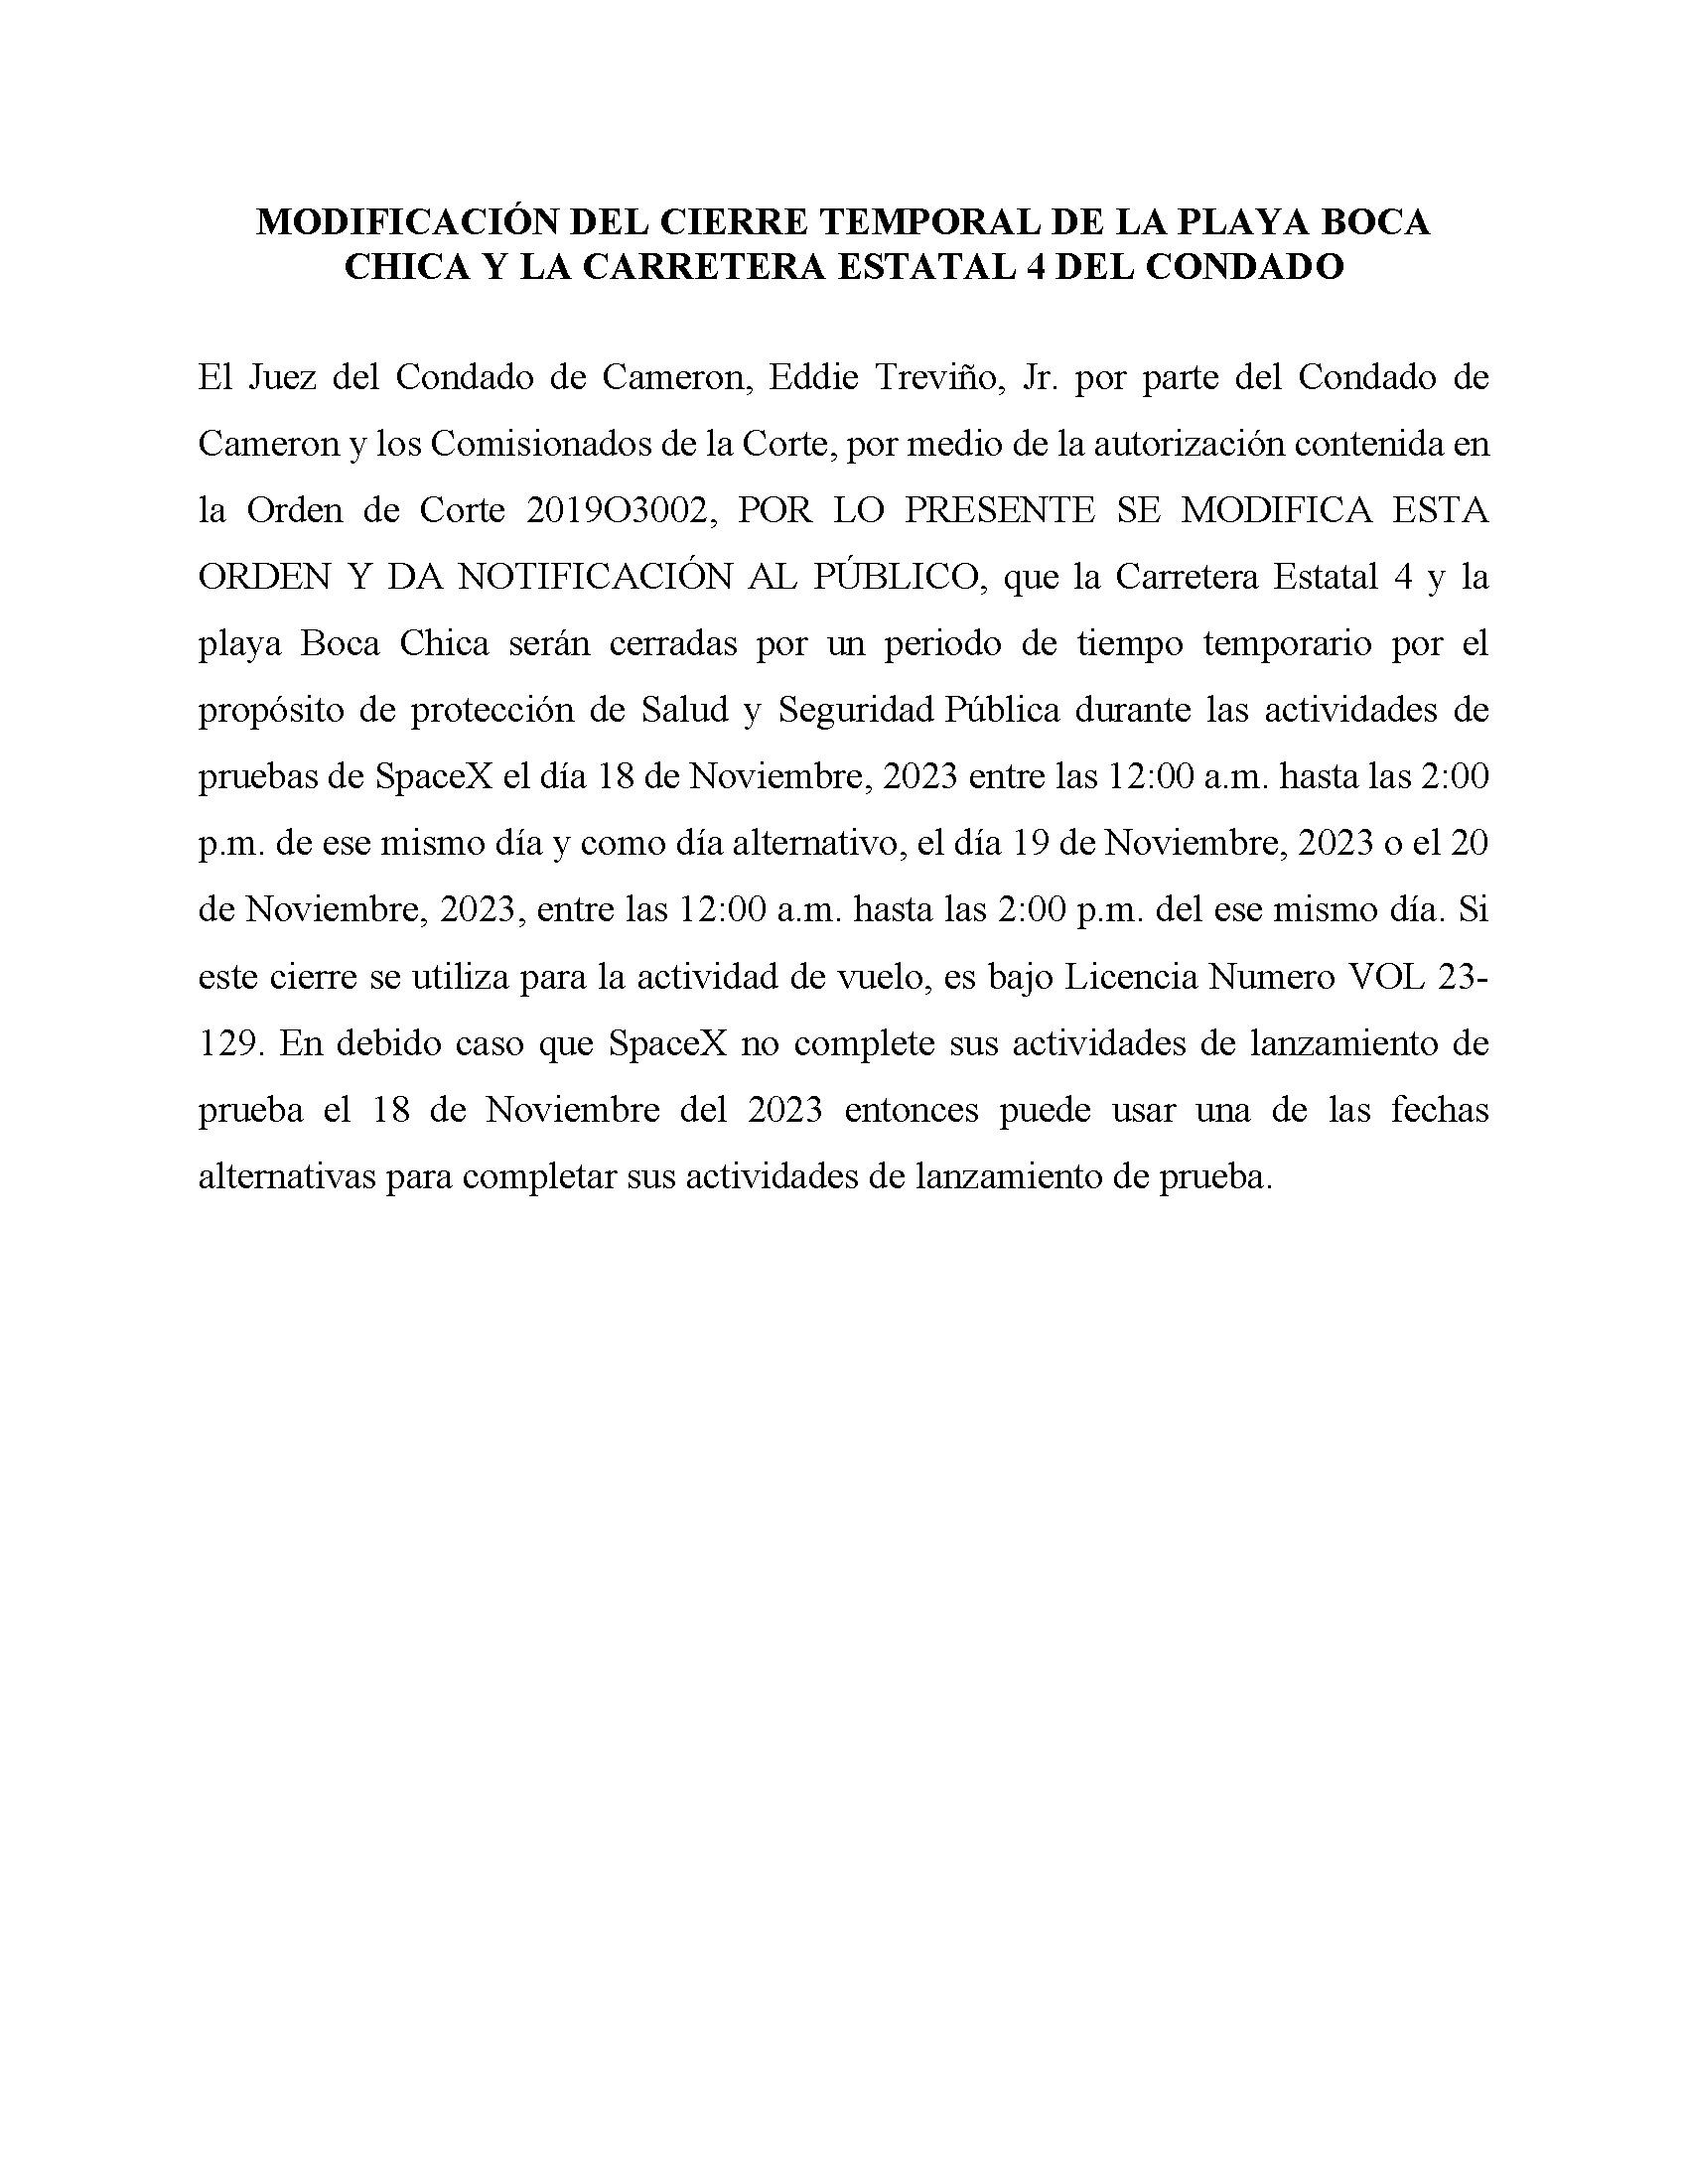 ORDER.CLOSURE OF HIGHWAY 4 Y LA PLAYA BOCA CHICA.SPANISH.11.18.2023 002